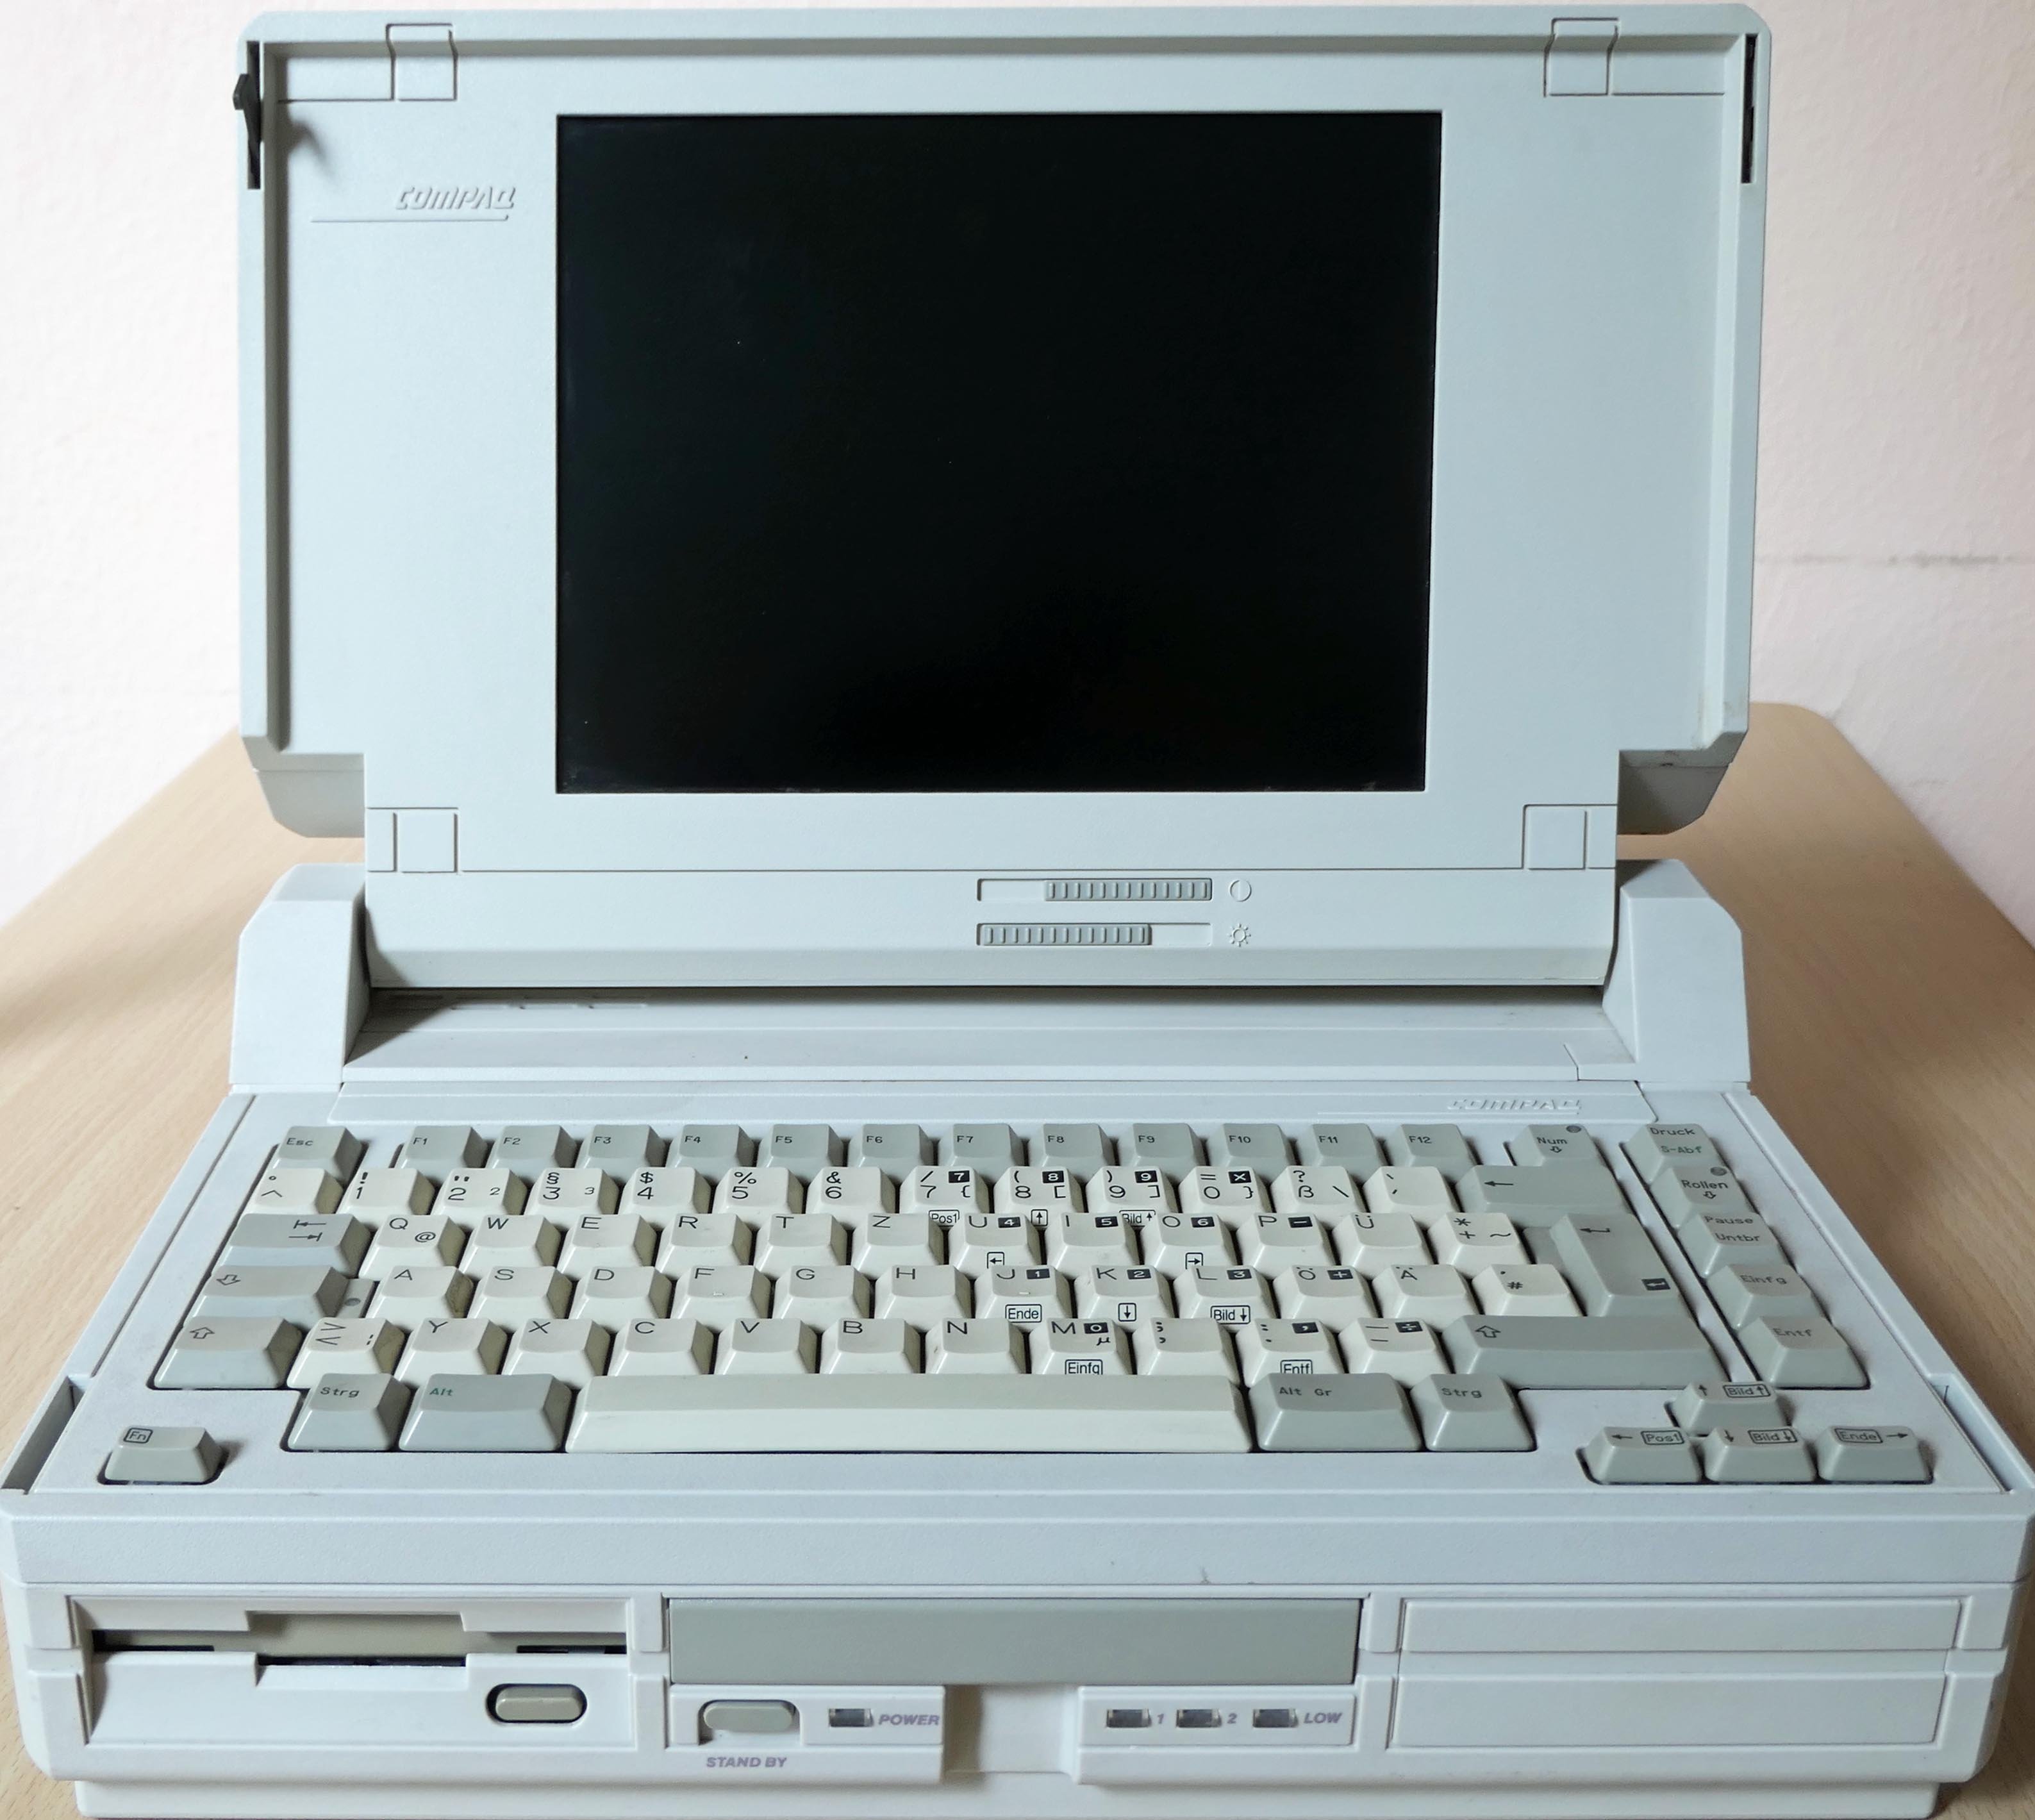 Laptop Computer	Compaq SLT 386/20 (museum comp:ex CC BY-NC-SA)